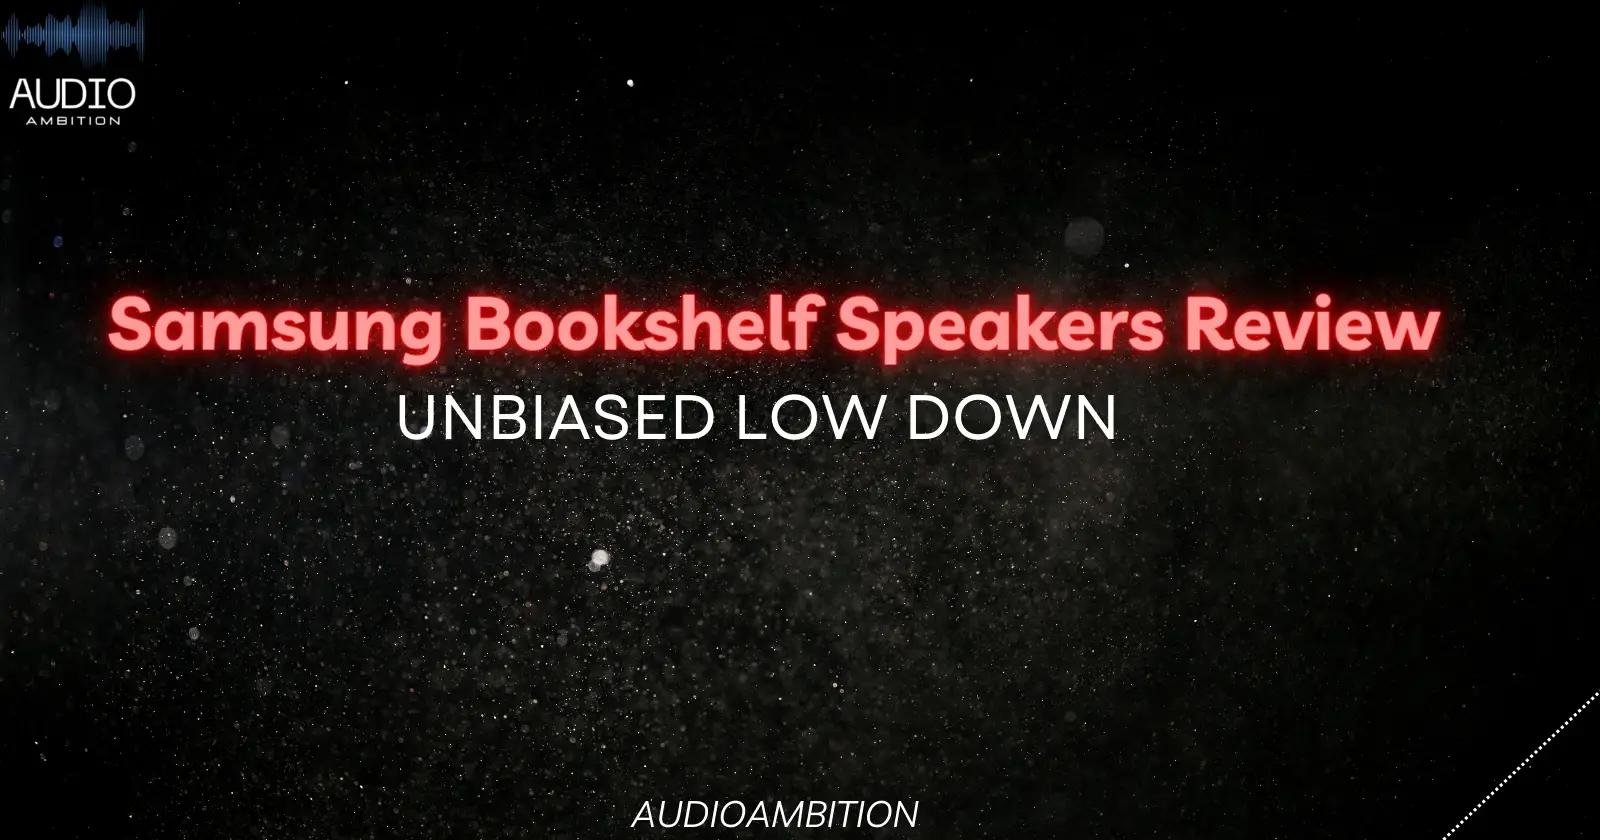 Samsung Bookshelf Speakers Review: Unbiased Low Down